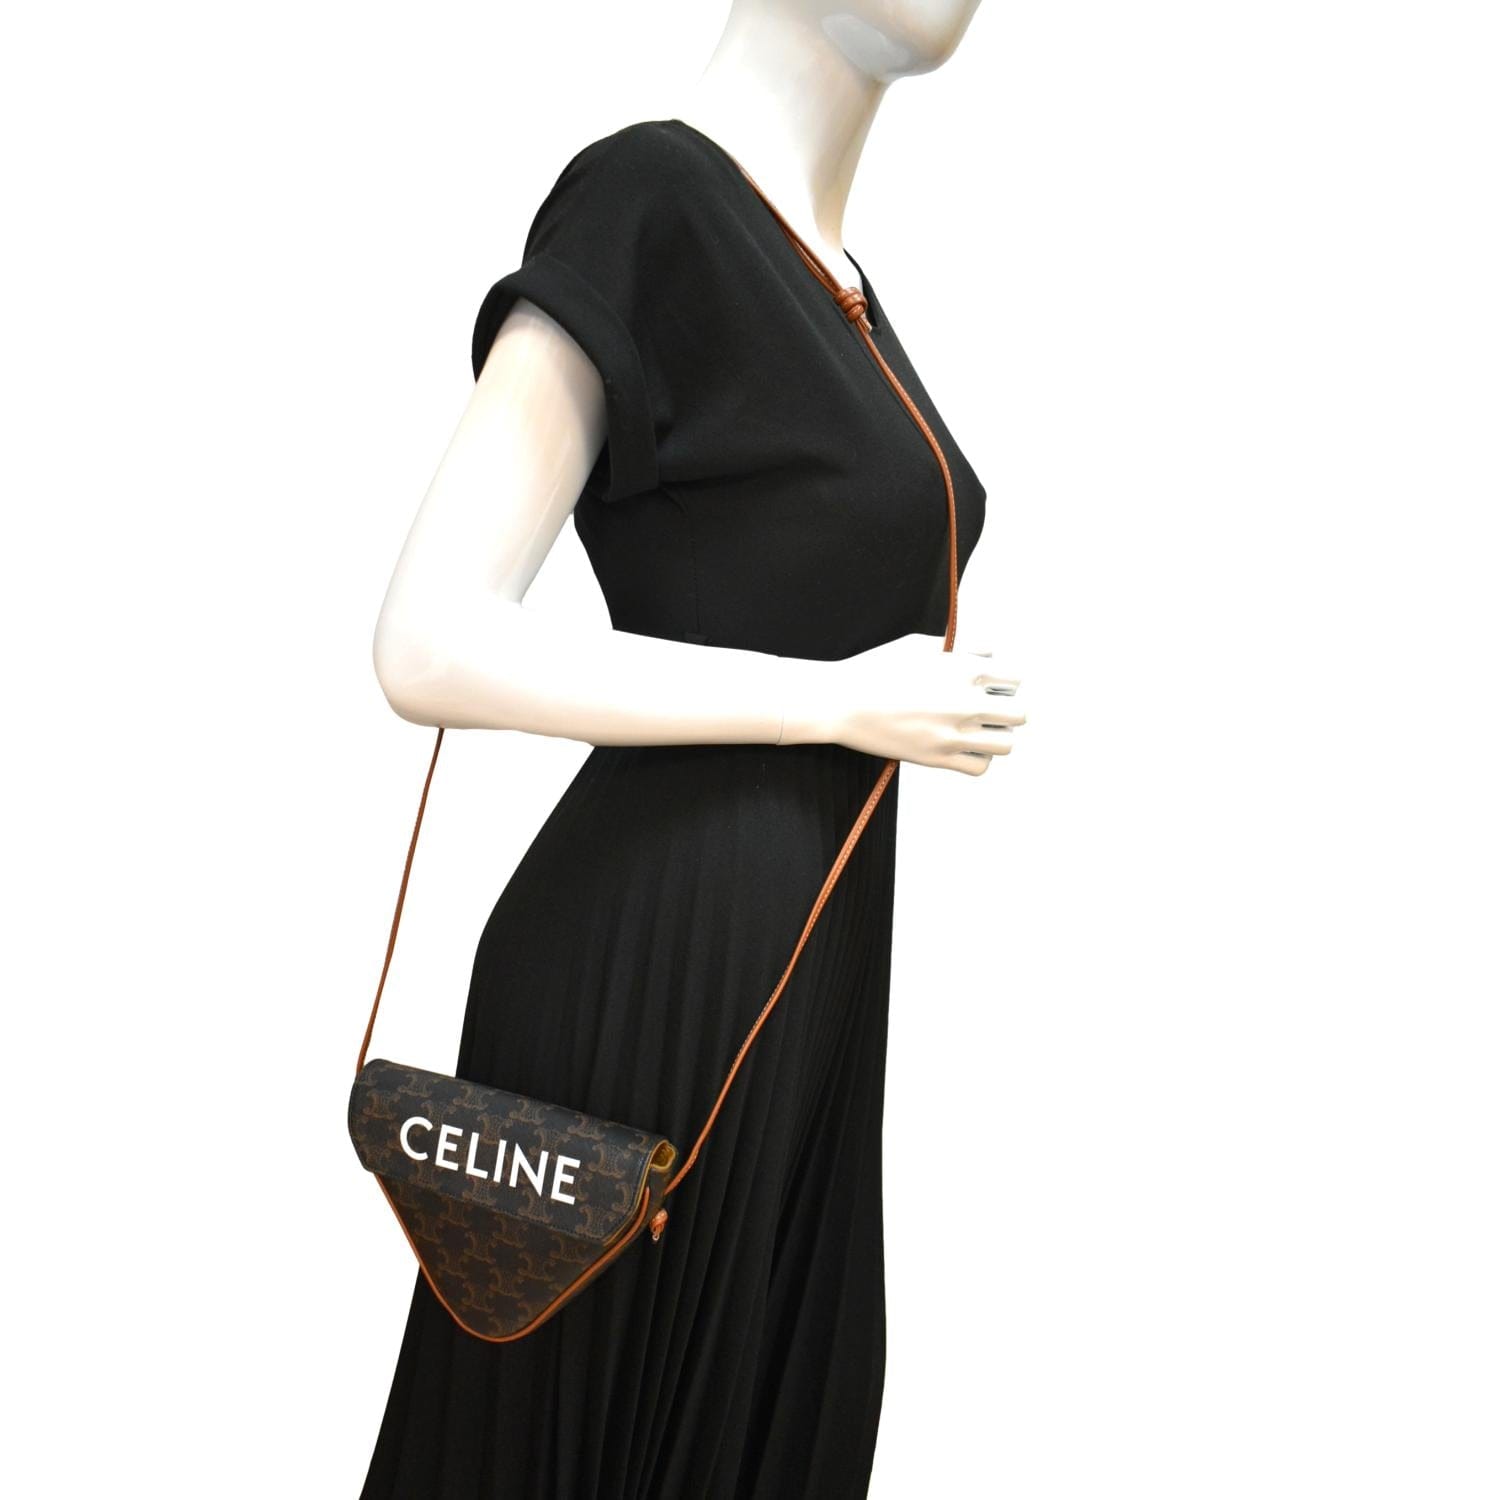 Men's Triangle Bag in Smooth calfskin with Celine print, CELINE